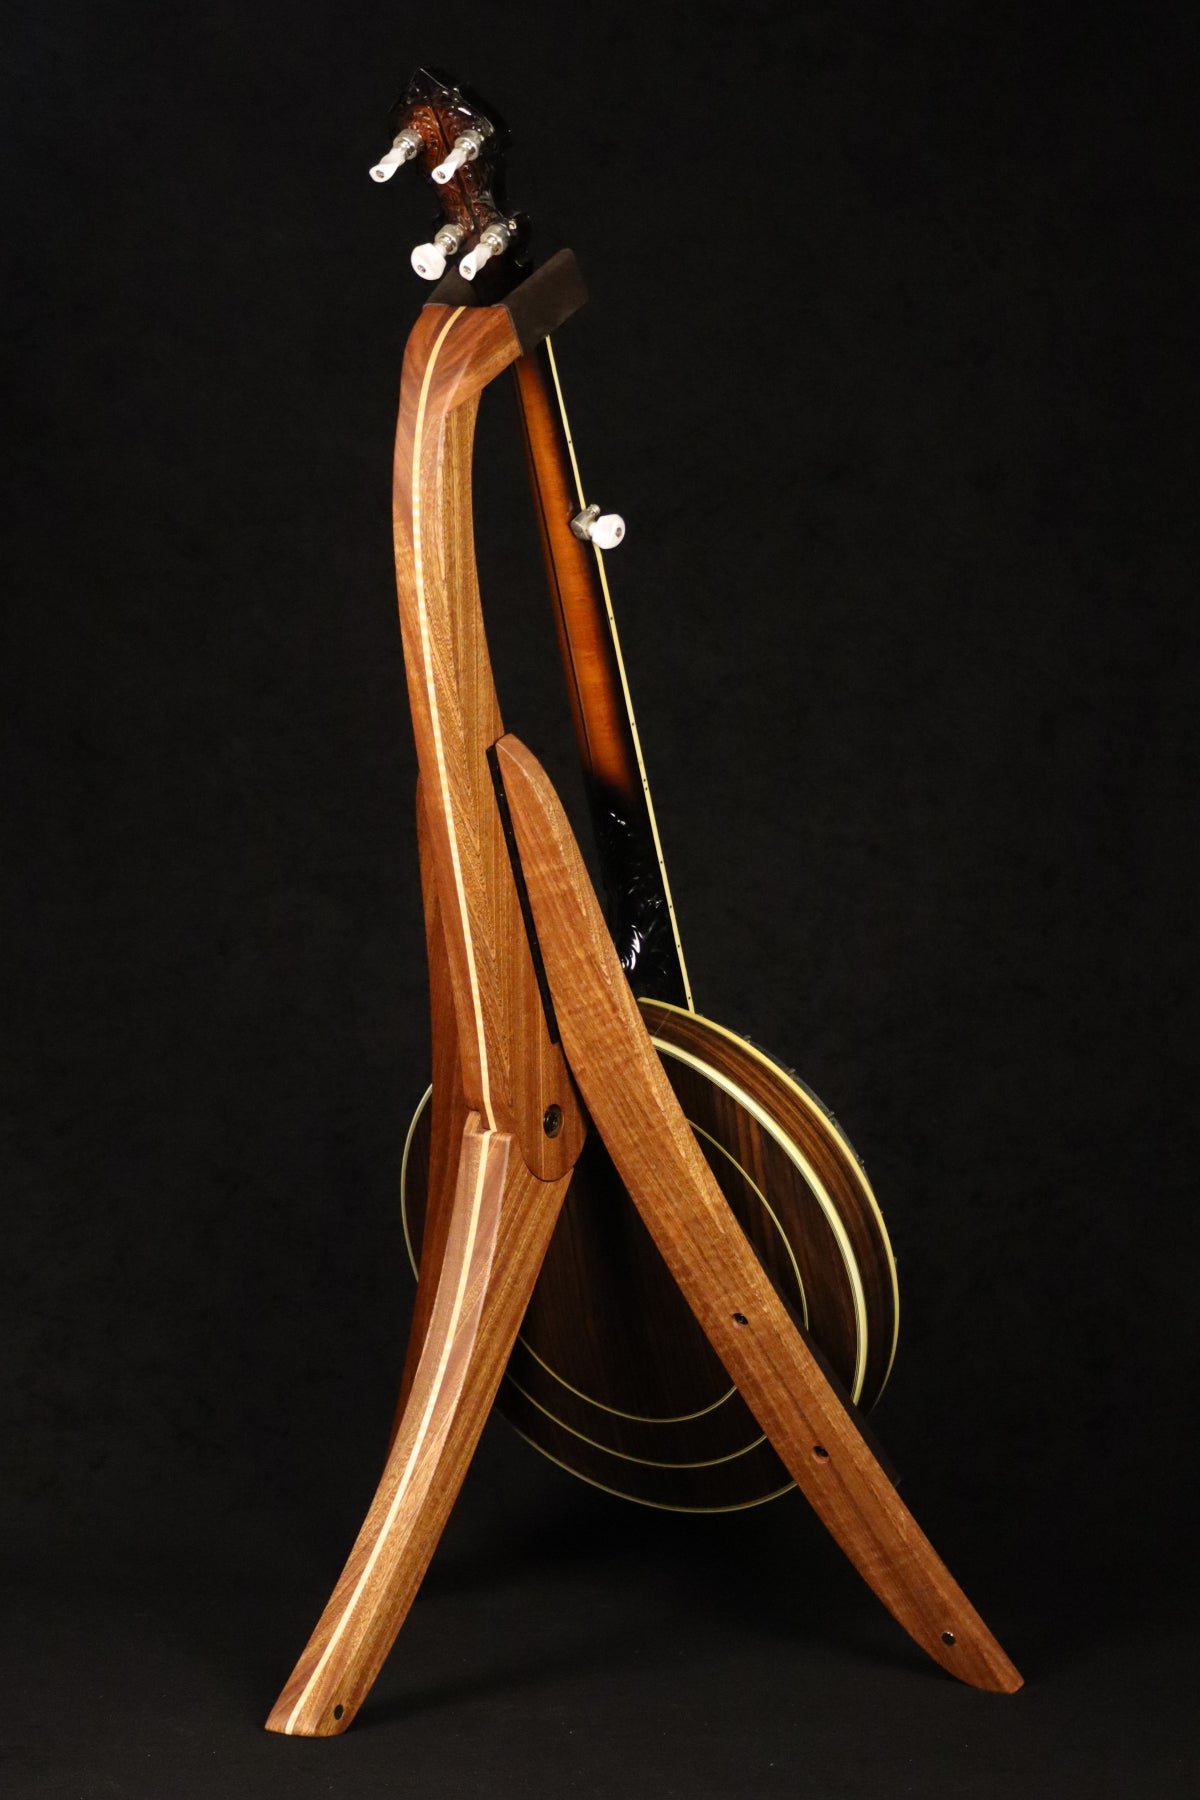 Folding sapele mahogany and curly maple wood banjo floor stand full rear image with Alvarez banjo